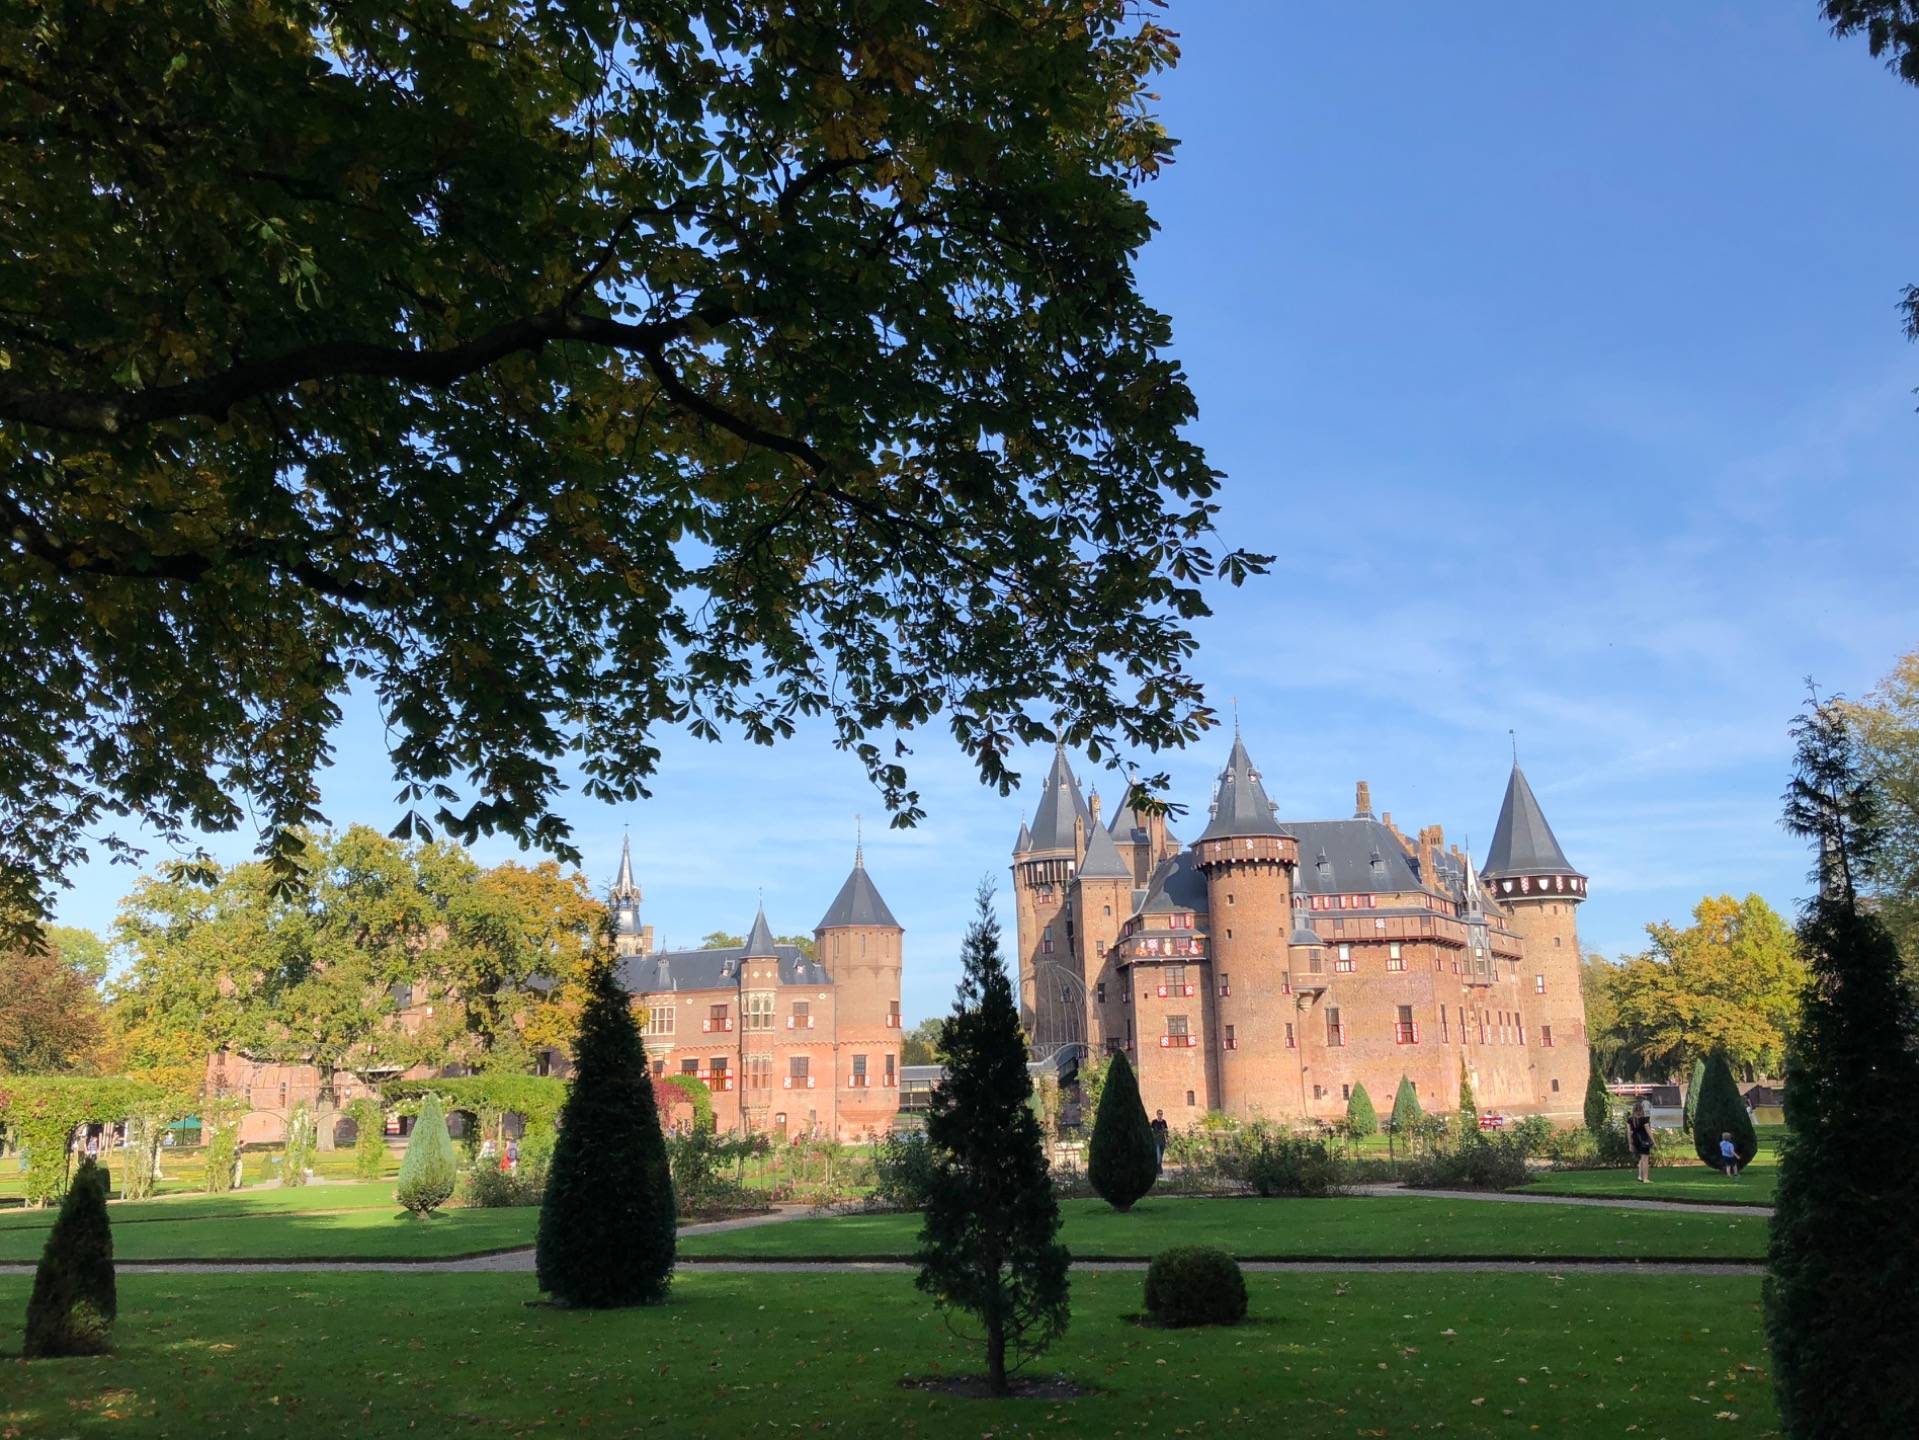 Castle De Haar - The Largest Castle in the Netherlands